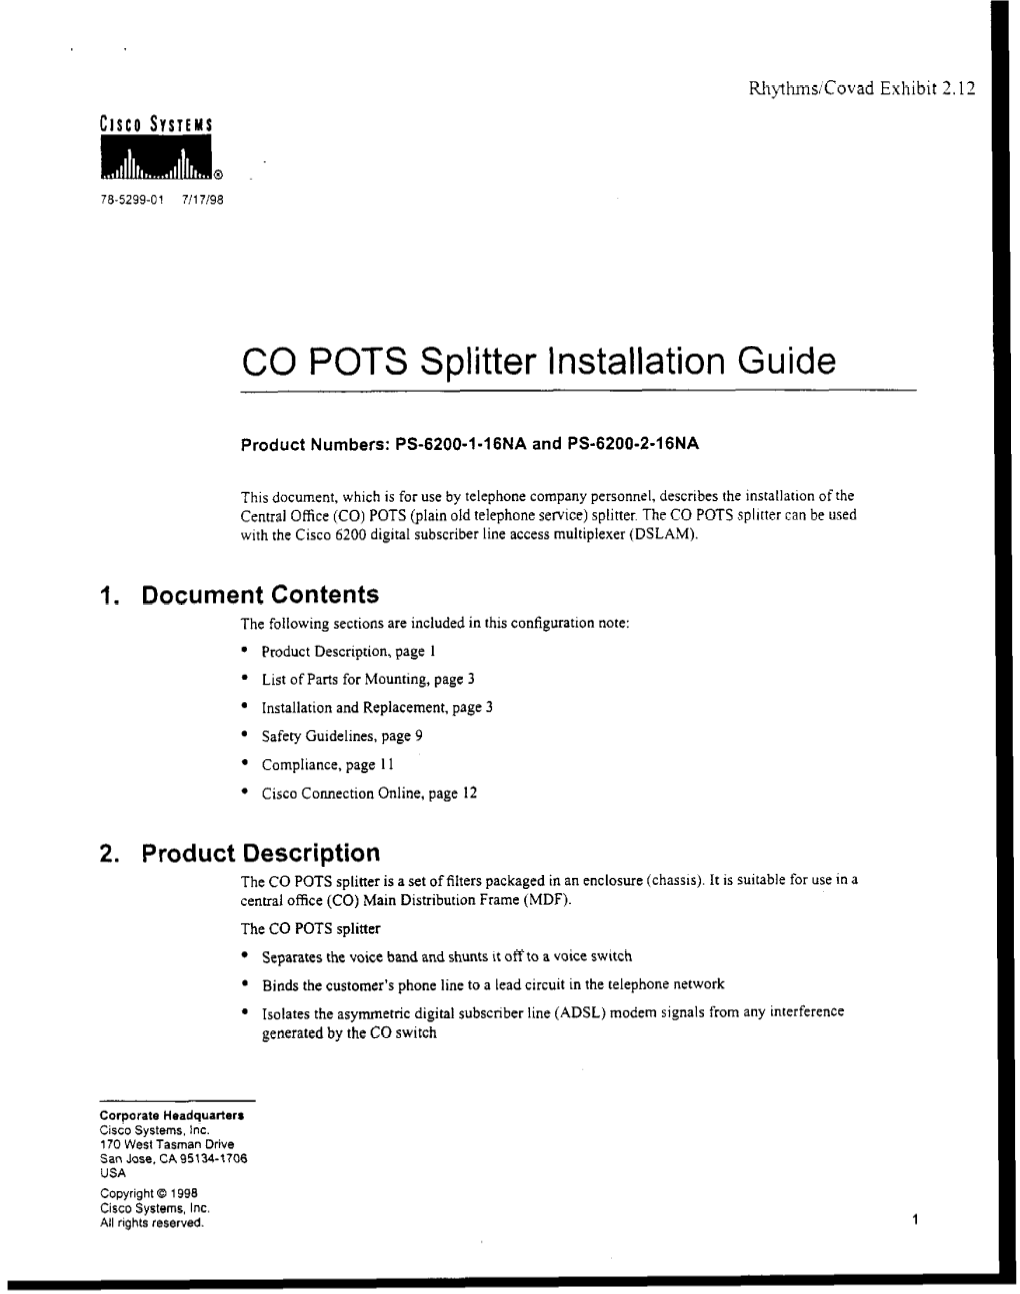 CO POTS Splitter Installation Guide